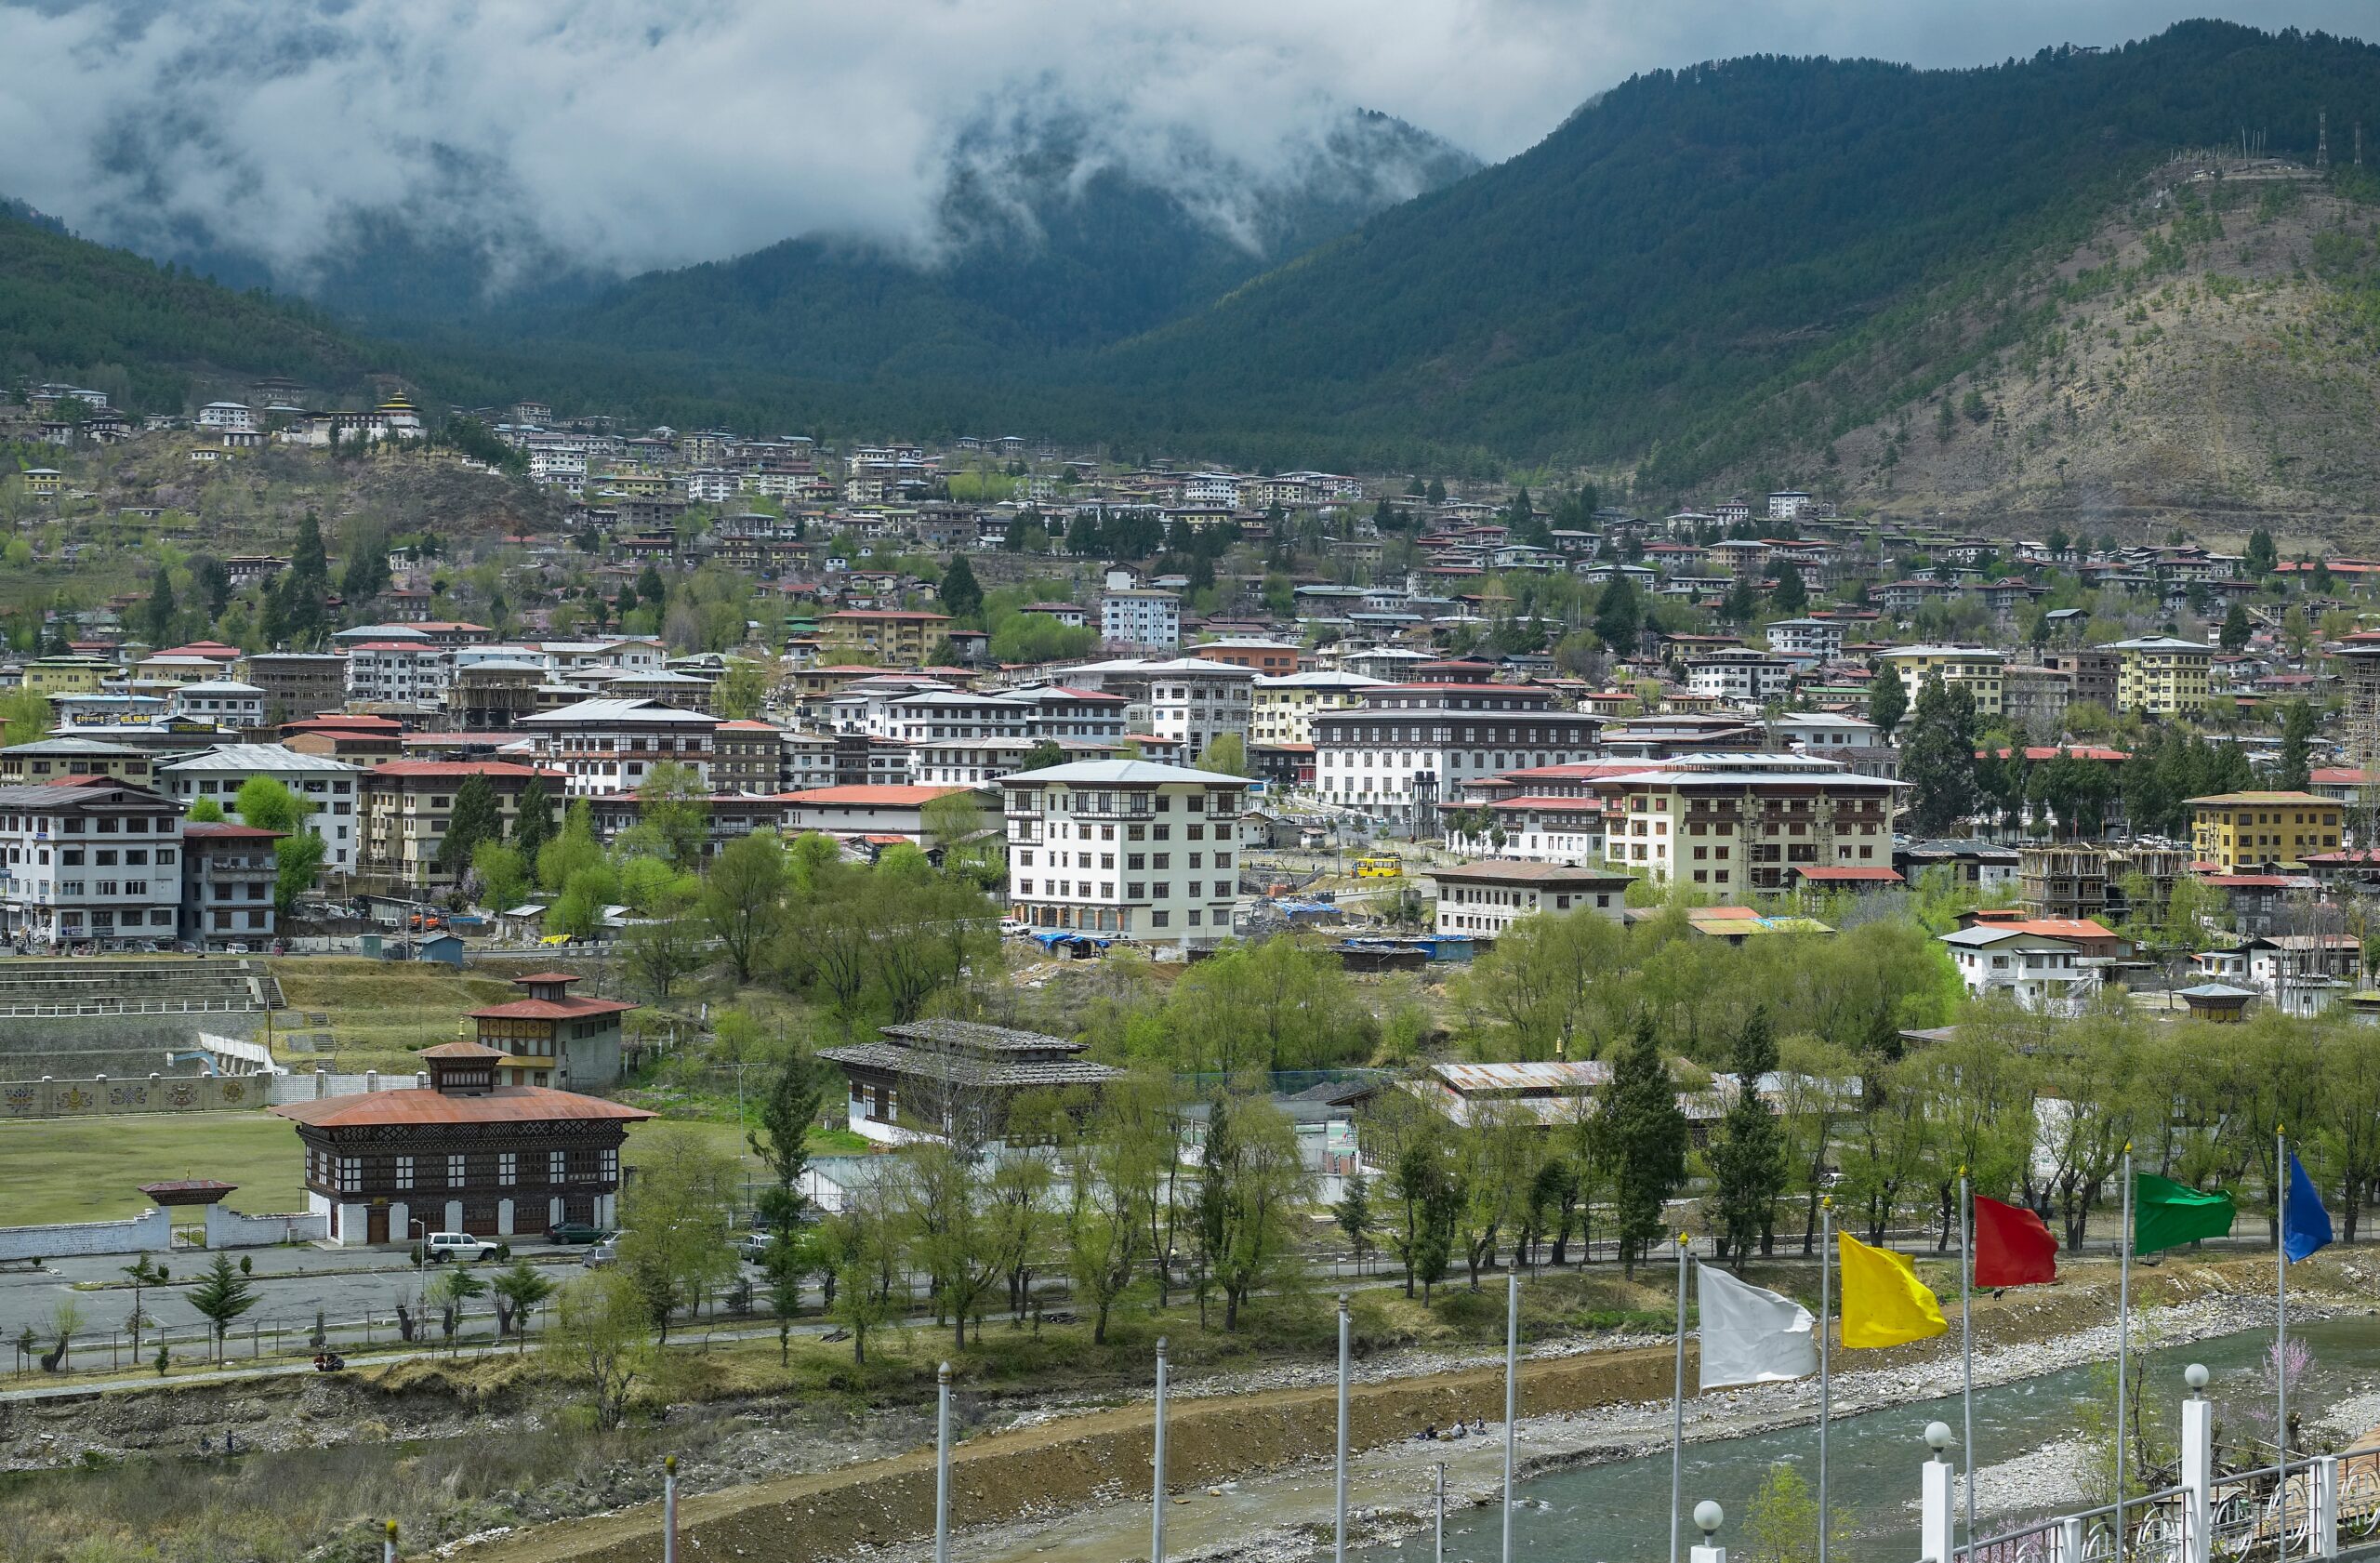 Thimphu in The Kingdom of Bhutan